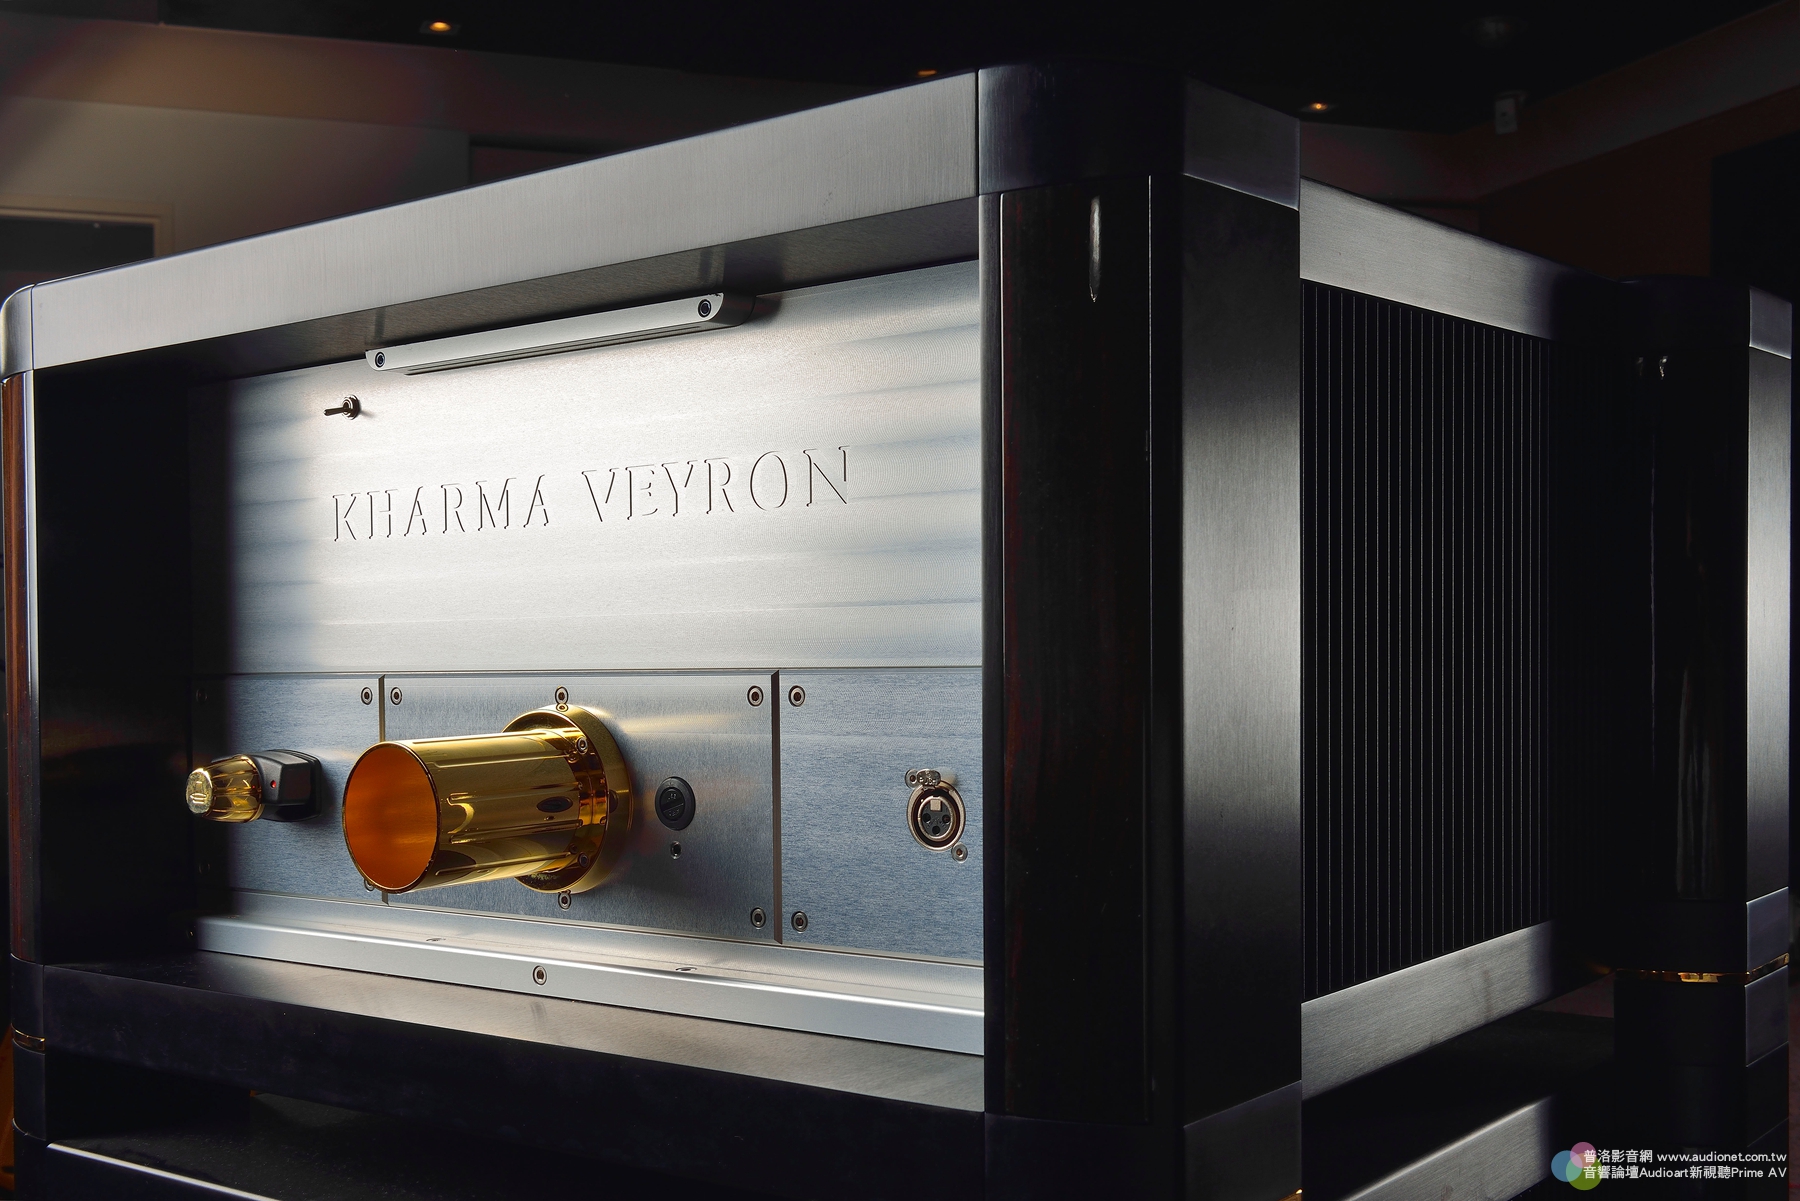 Kharma Enigma Veyron System與EV-1喇叭真是美艷奪目啊